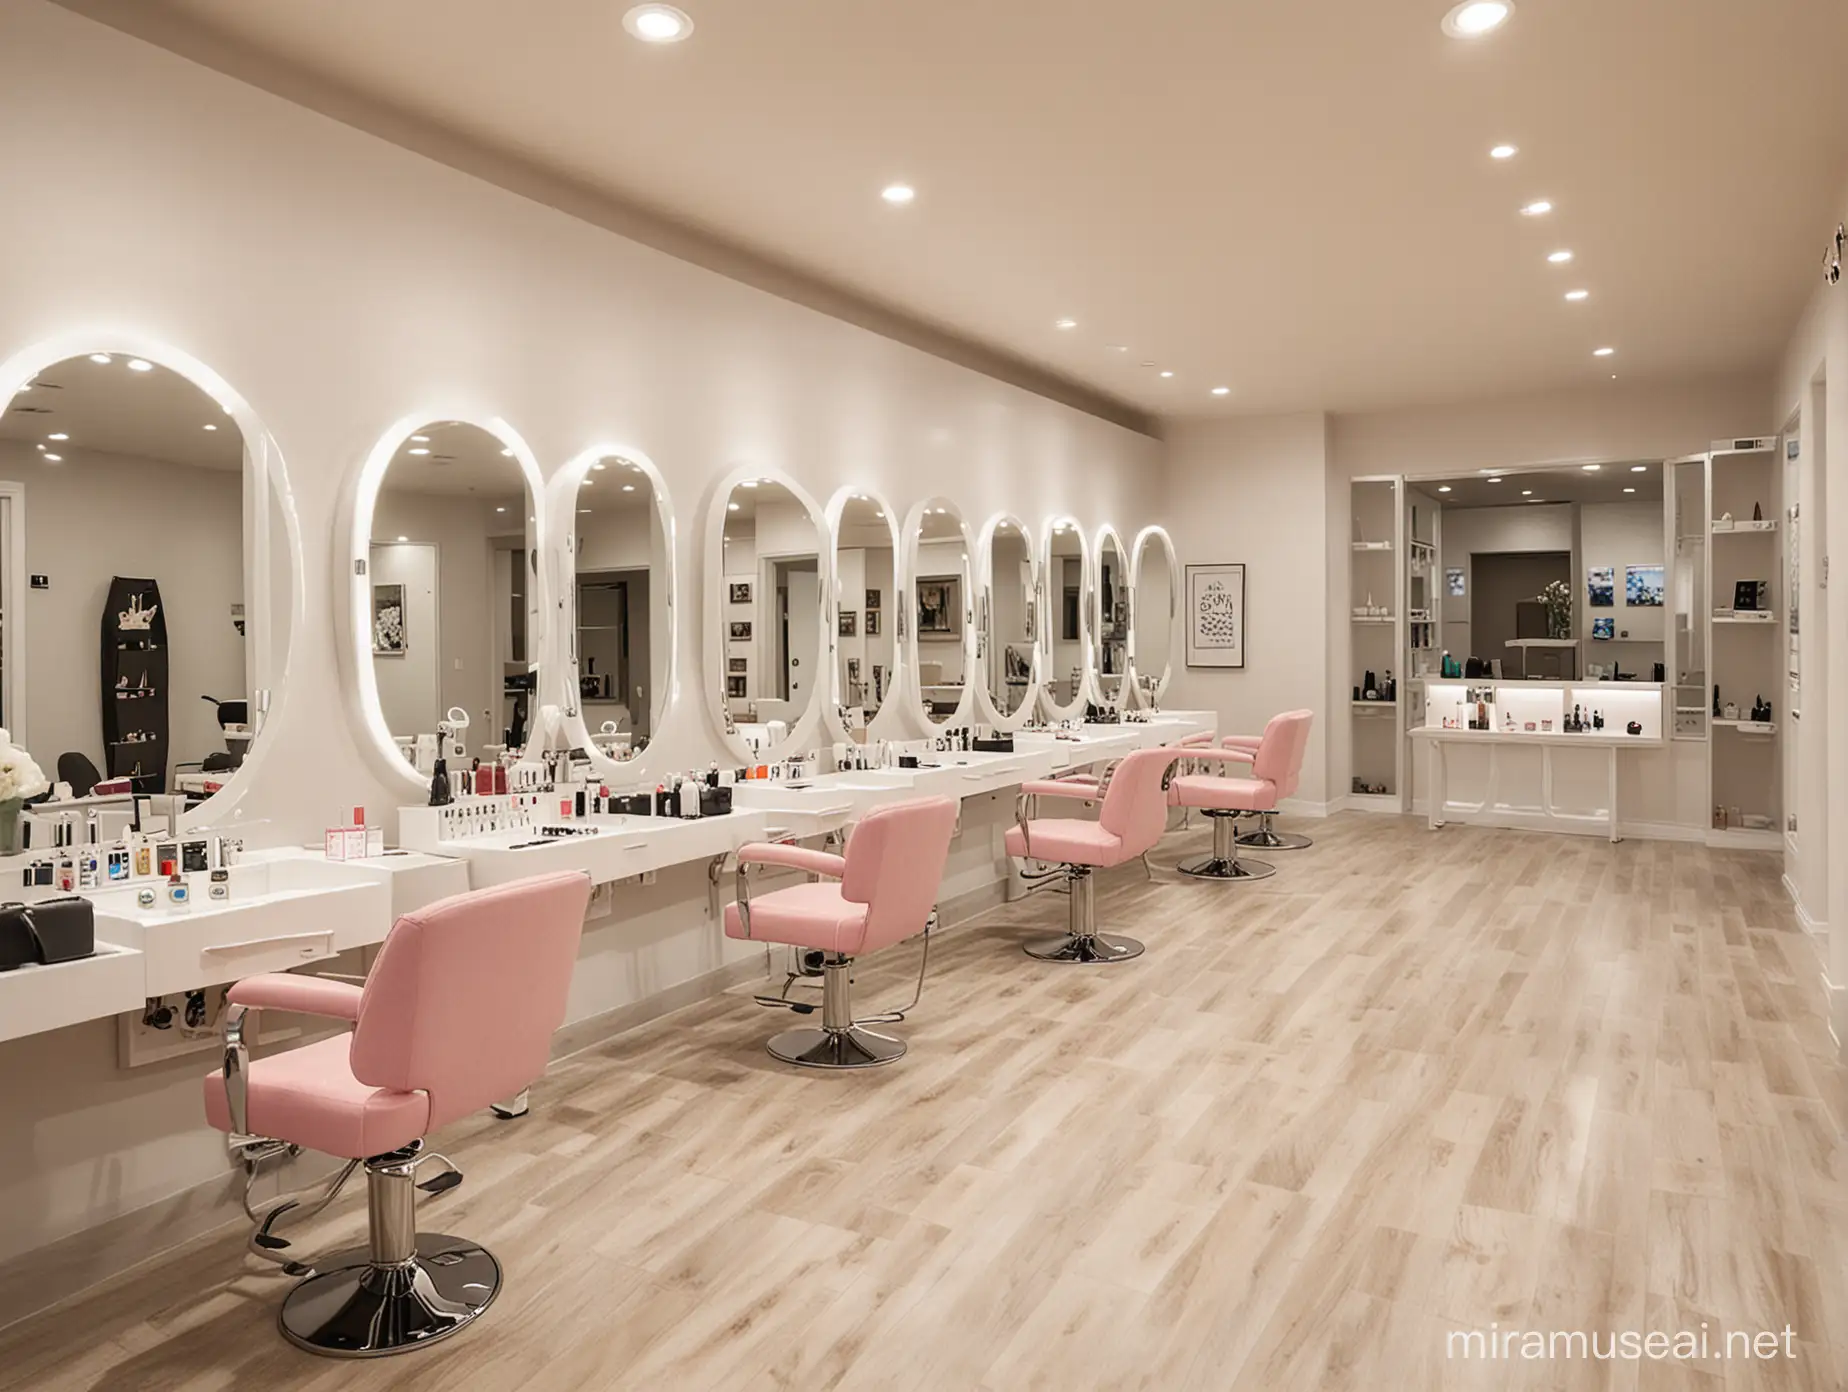 Modern Nail Salon Interior Design with Vibrant Colors and Chic Decor